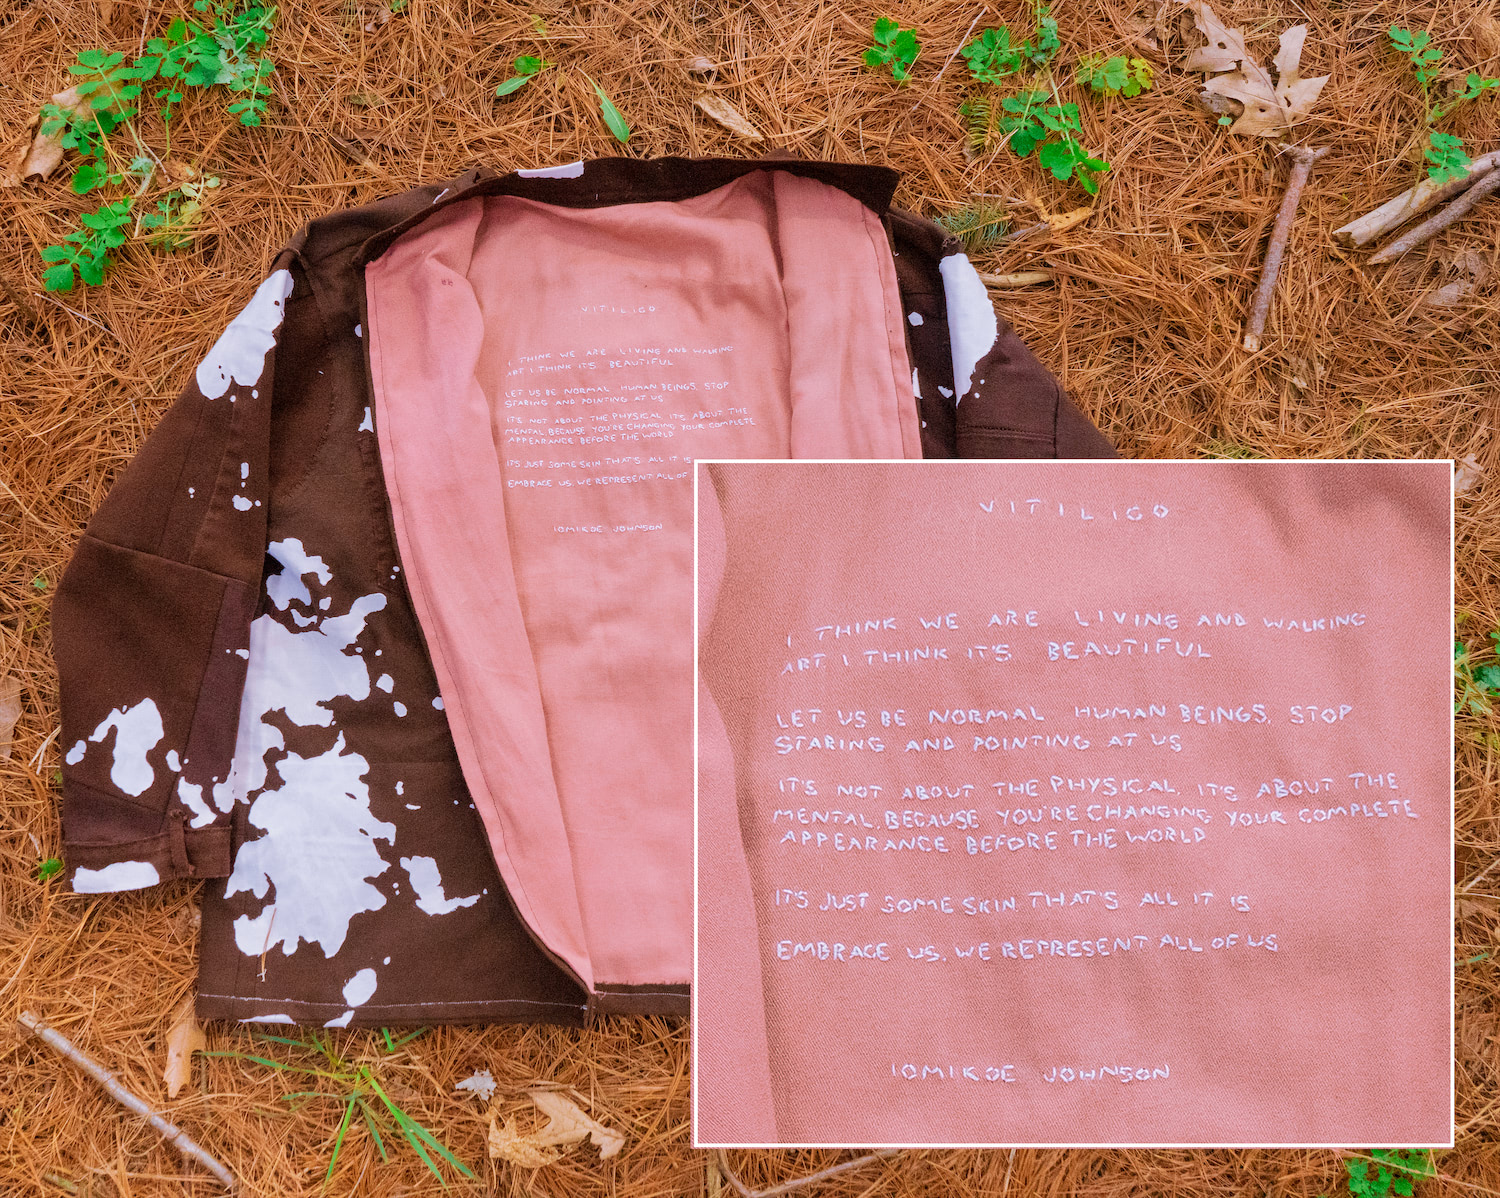 Vitiligo jacket, placed on the ground, partially opened